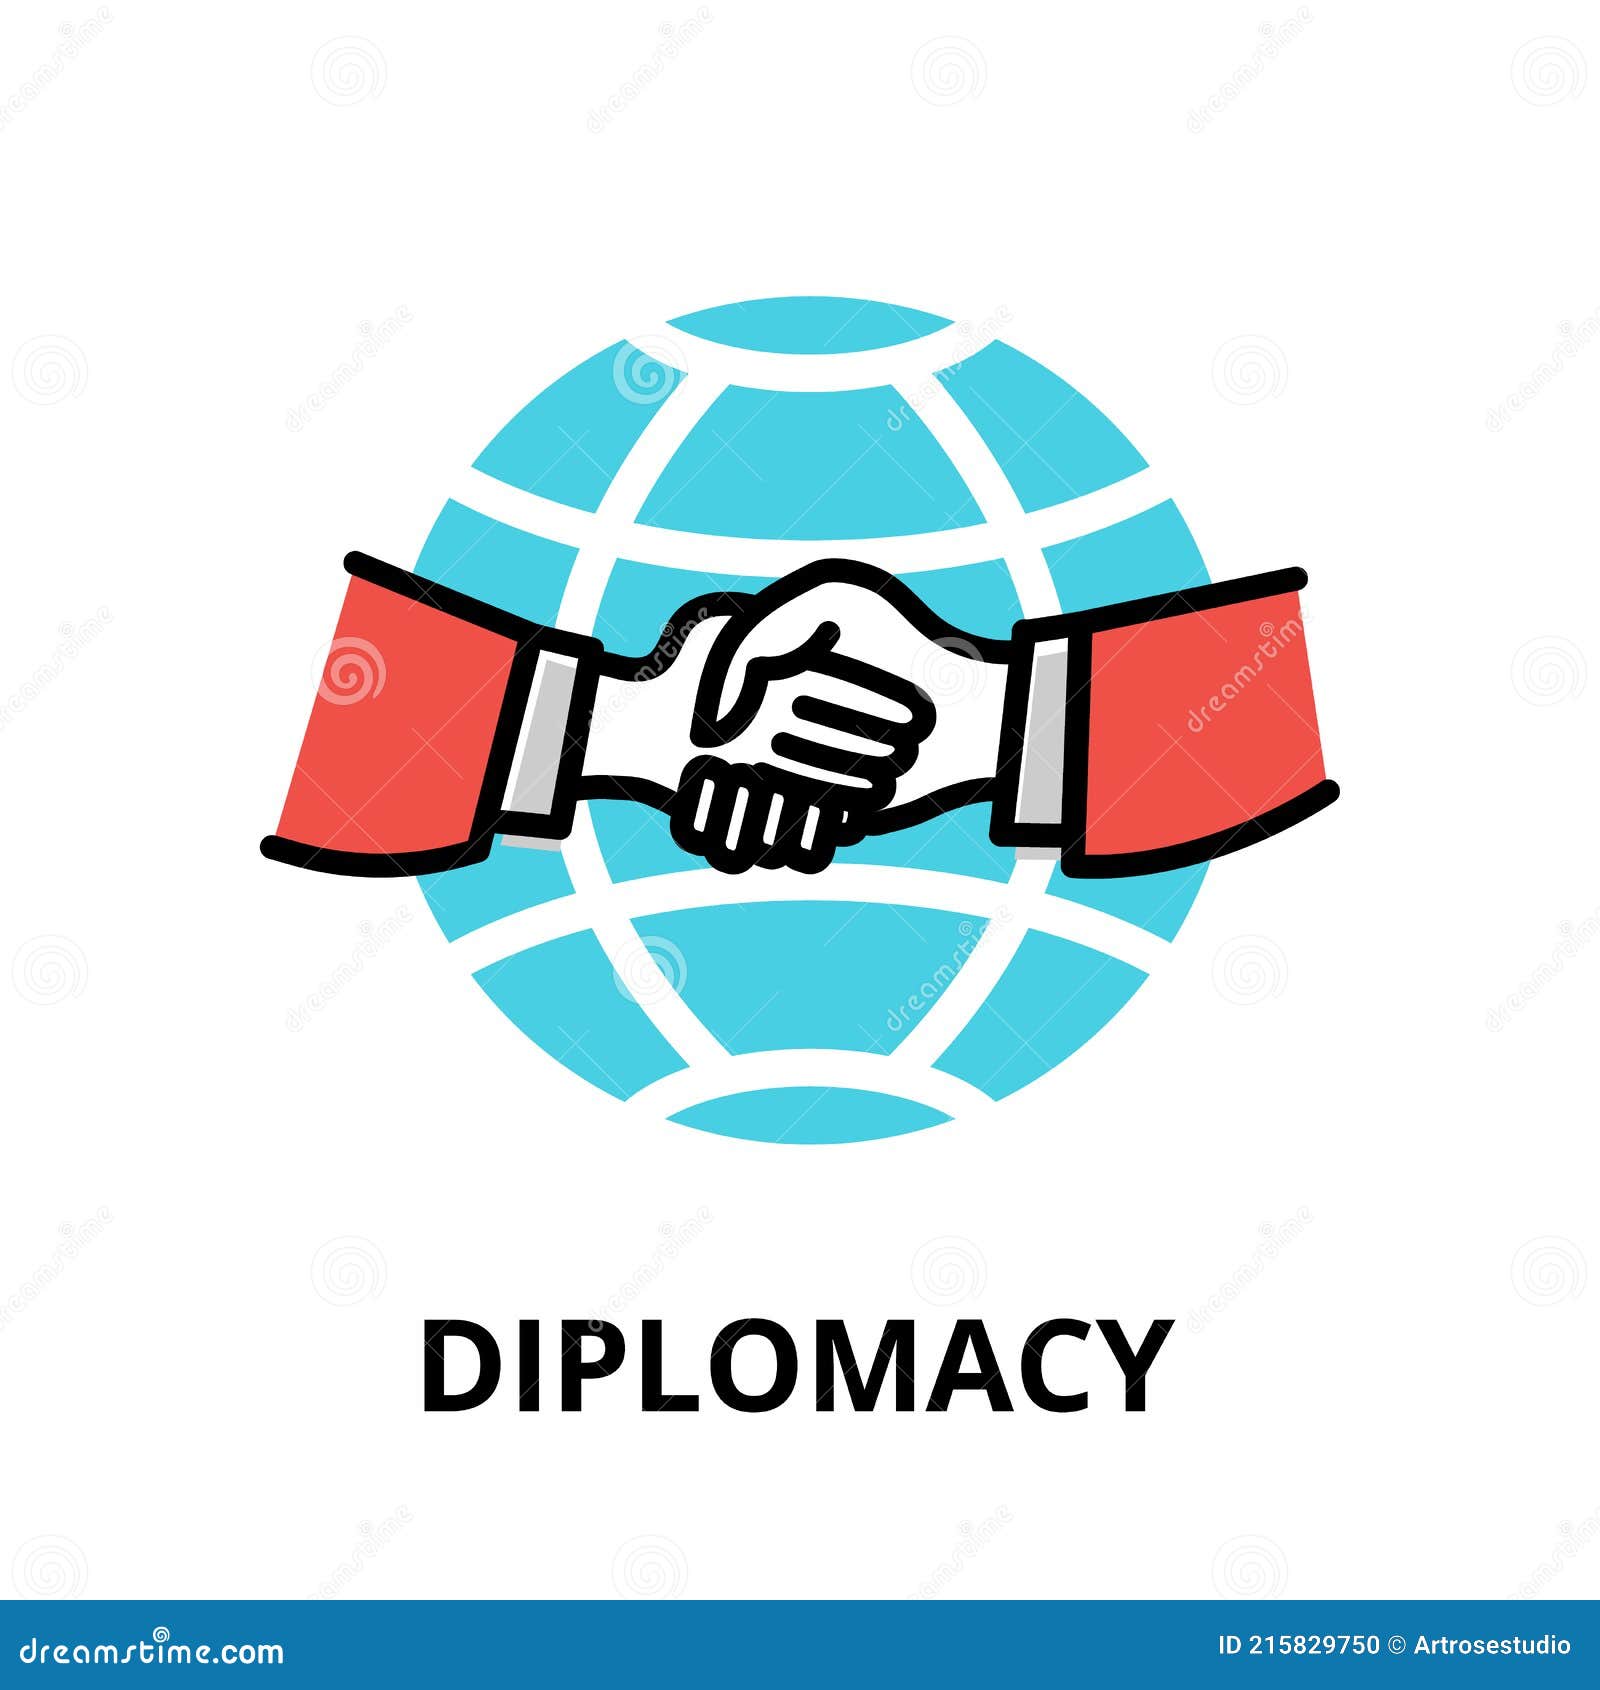 diplomacy icon concept, politics collection